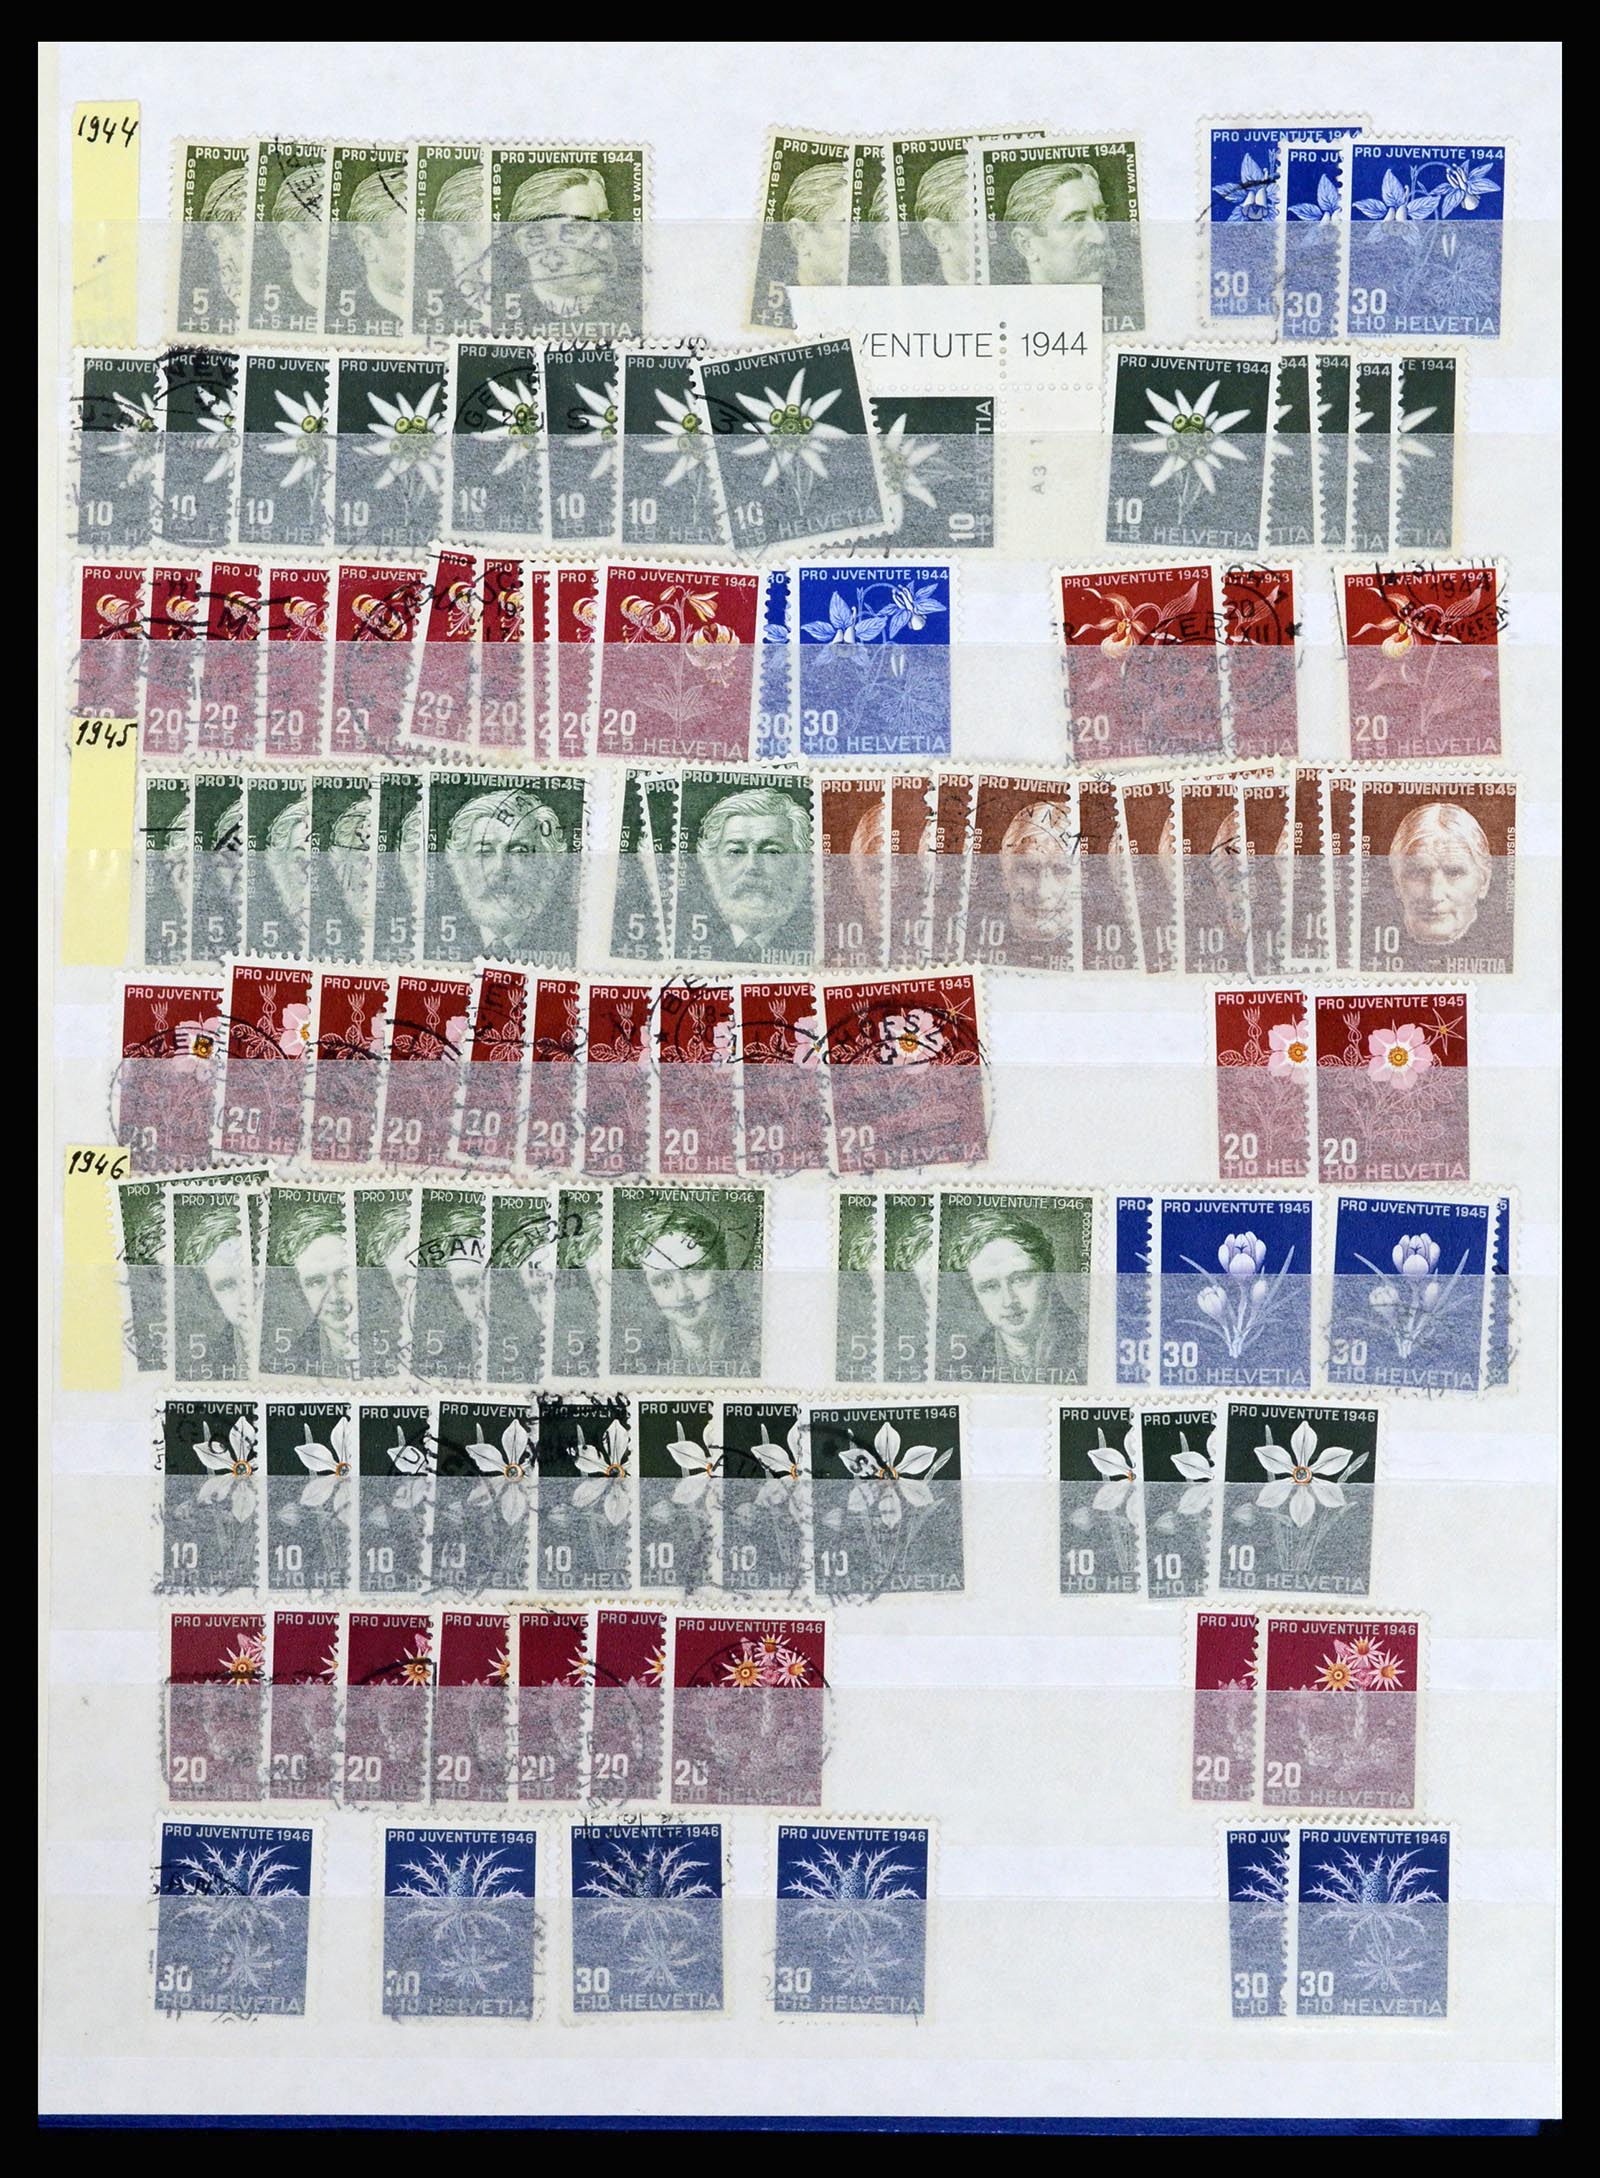 37061 008 - Stamp collection 37061 Switzerland 1913-2000.